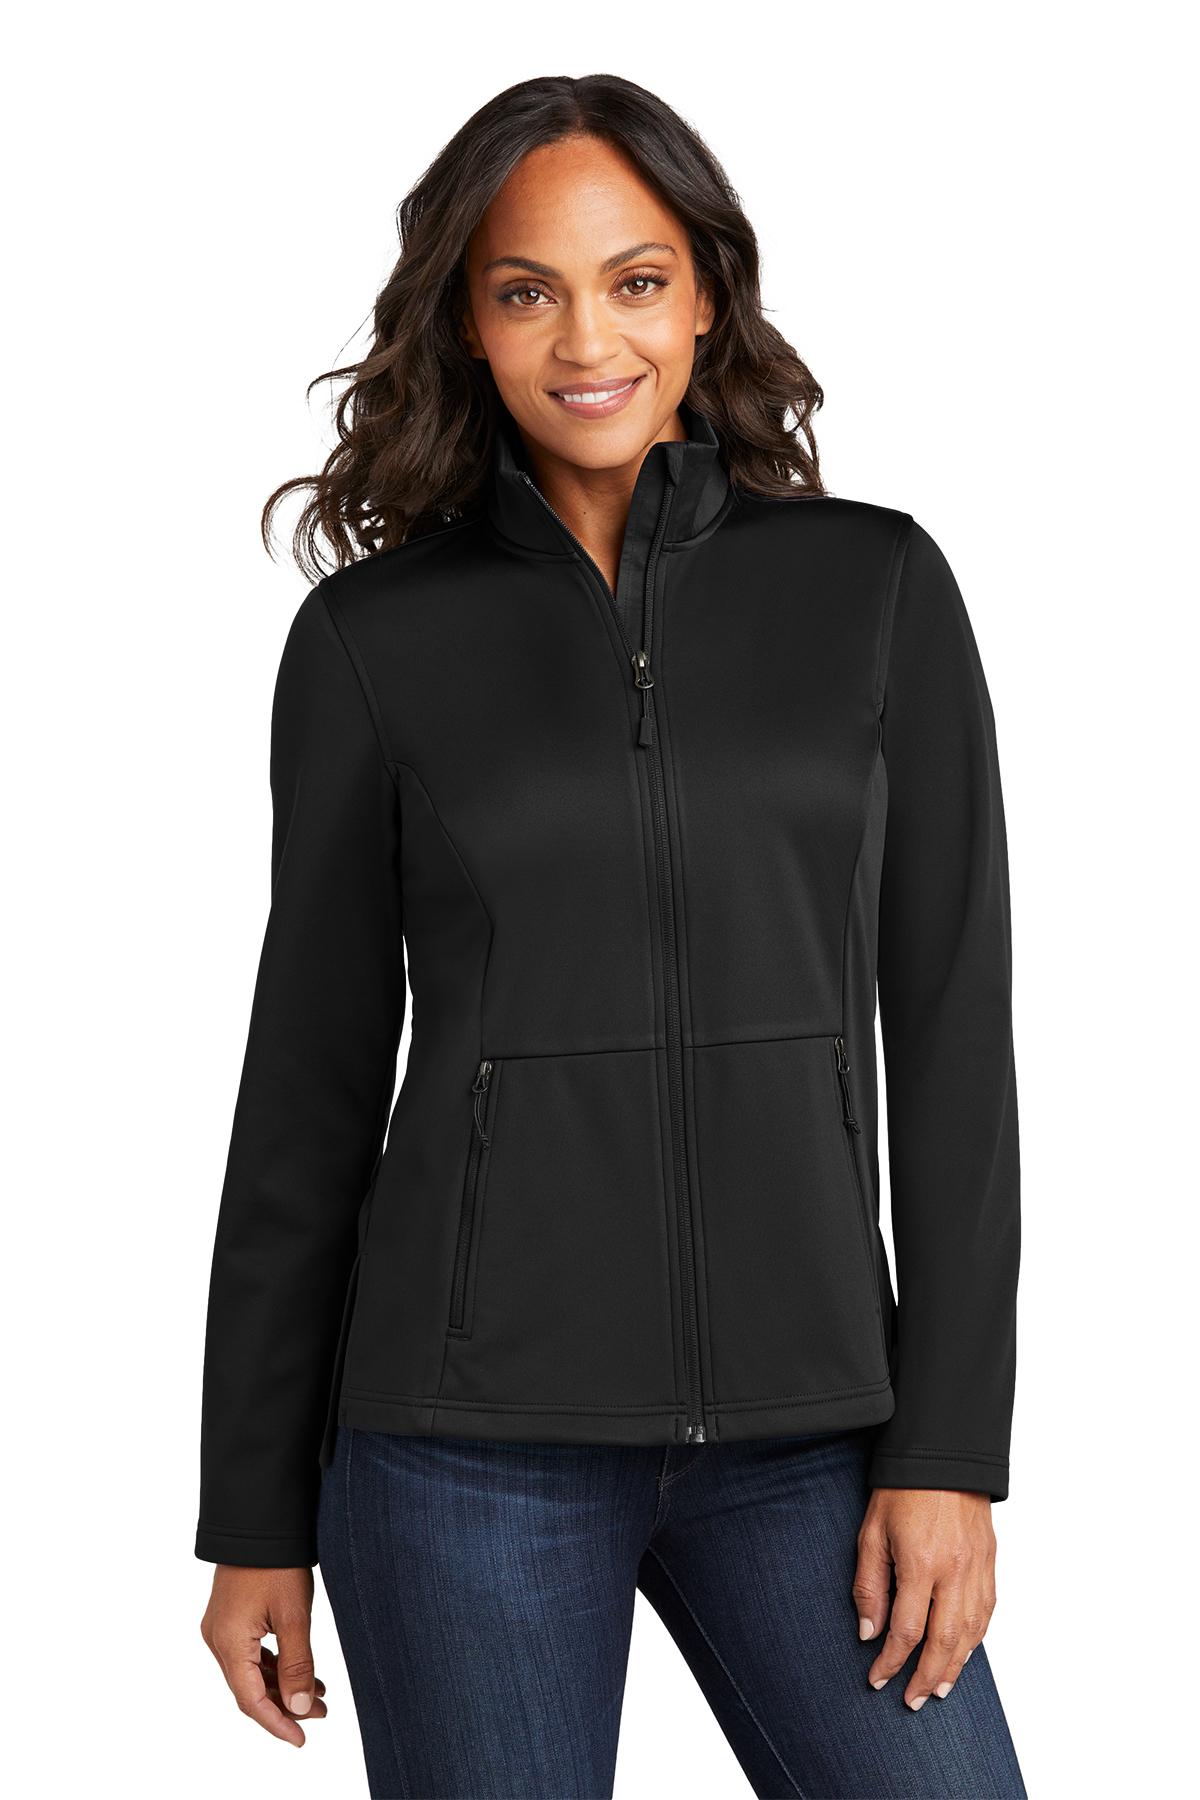 Jacket Ladies Flexshell | Port Authority SanMar | Product